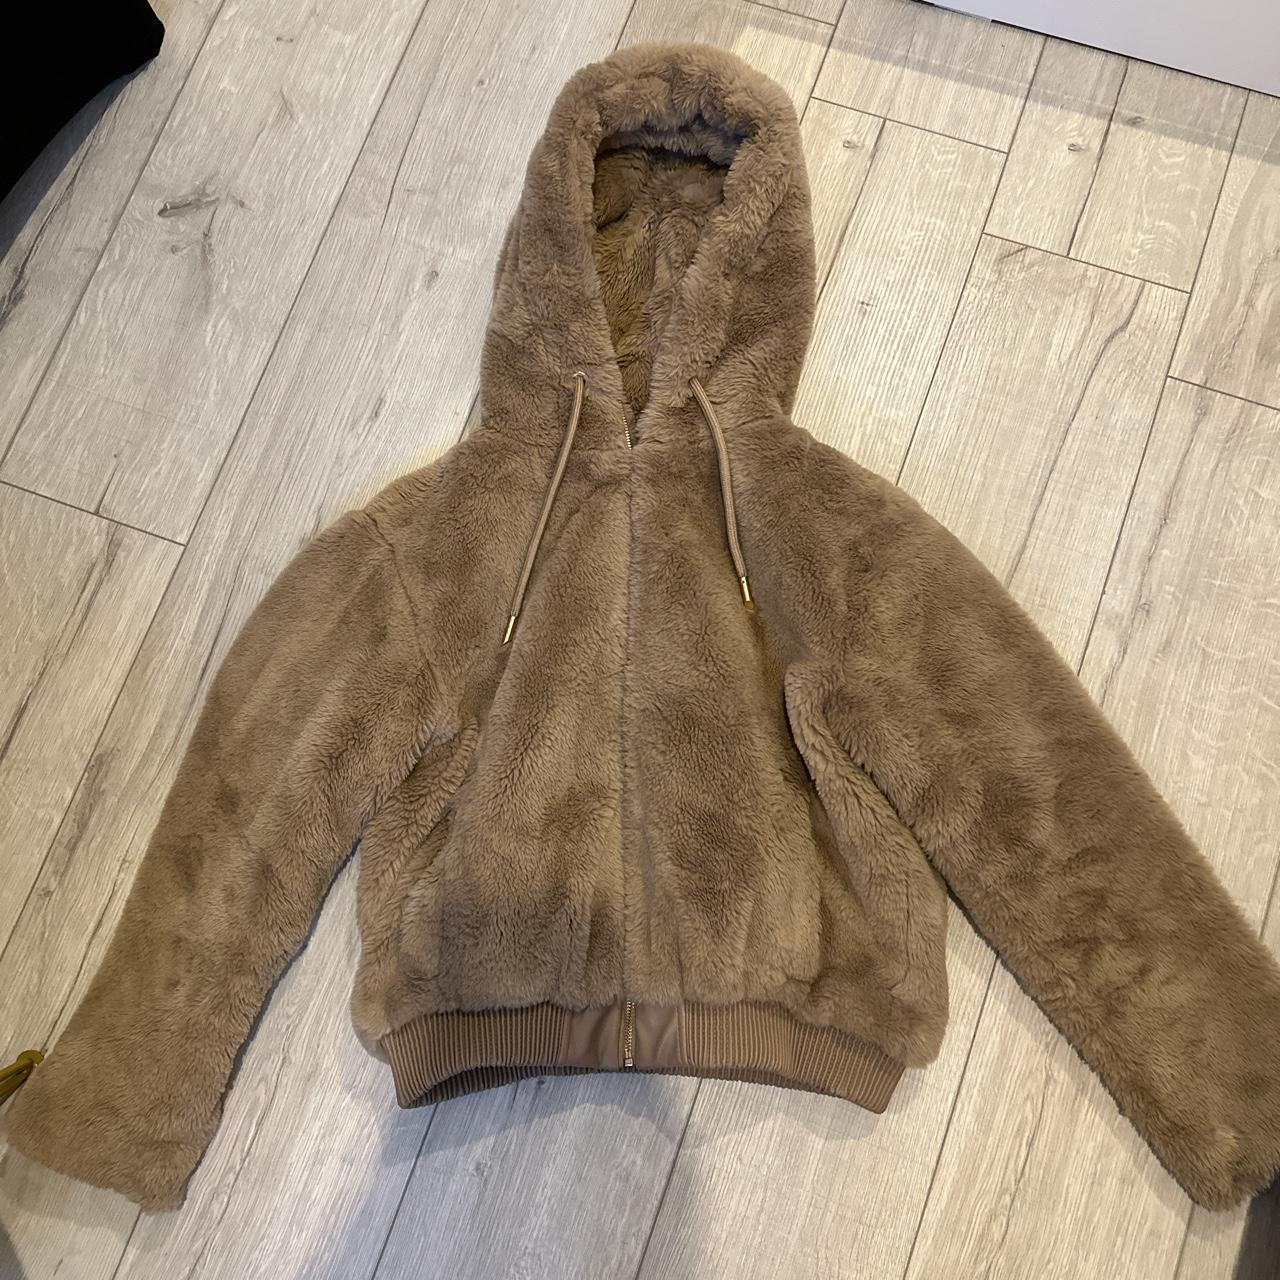 Zara faux fur hooded jacket Colour camel Size... - Depop